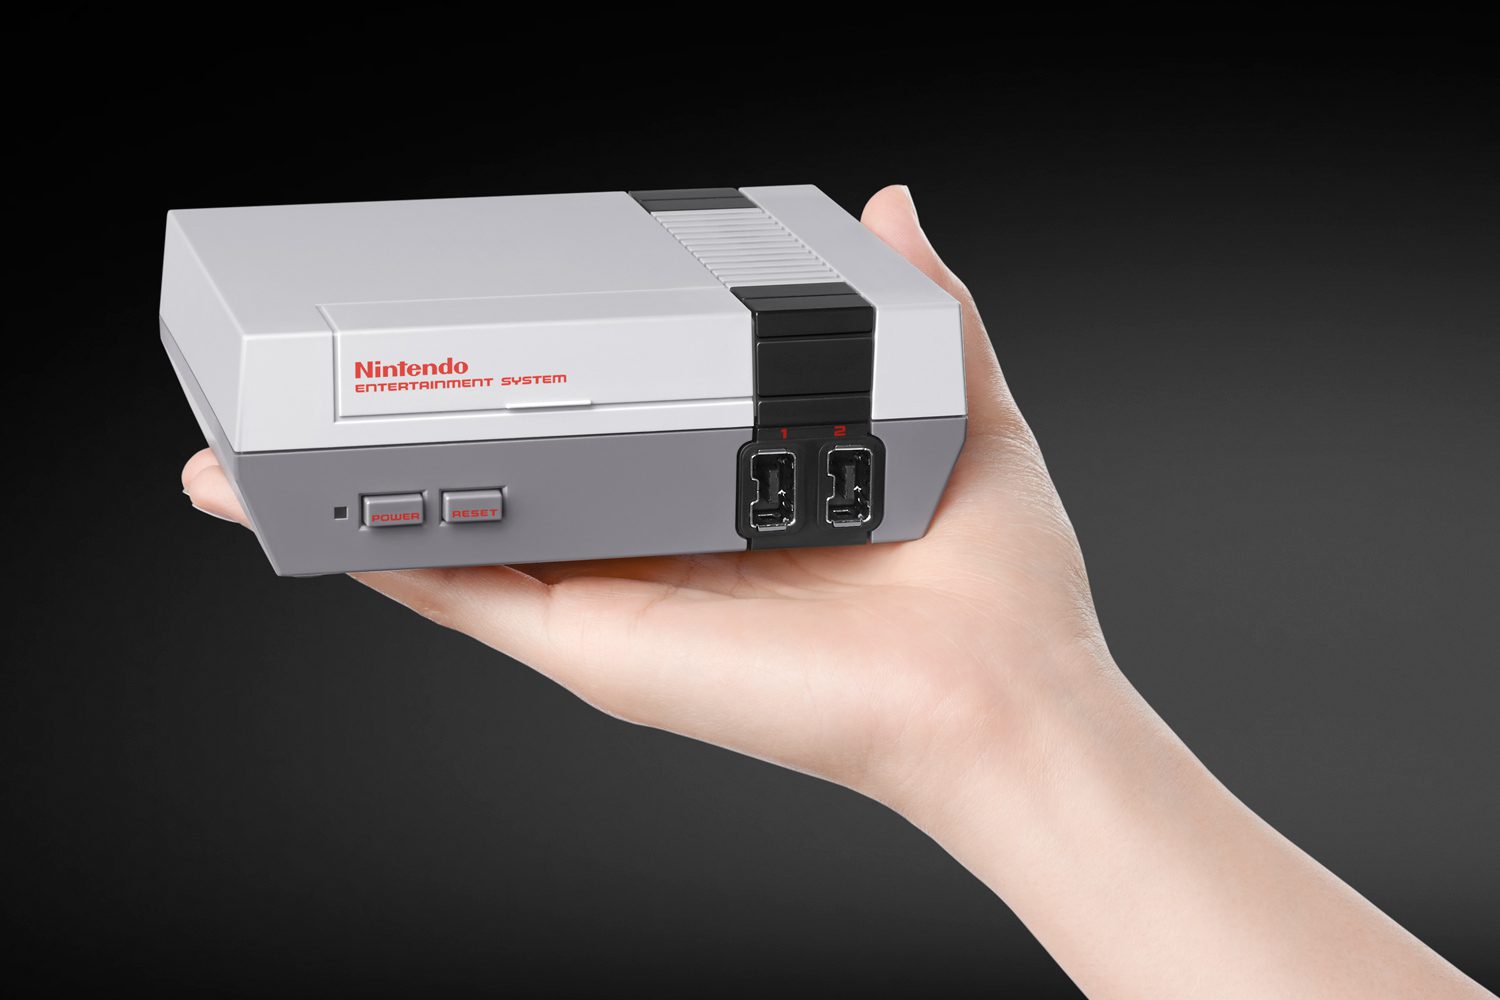 NES Classic Edition sold 2.3 million worldwide